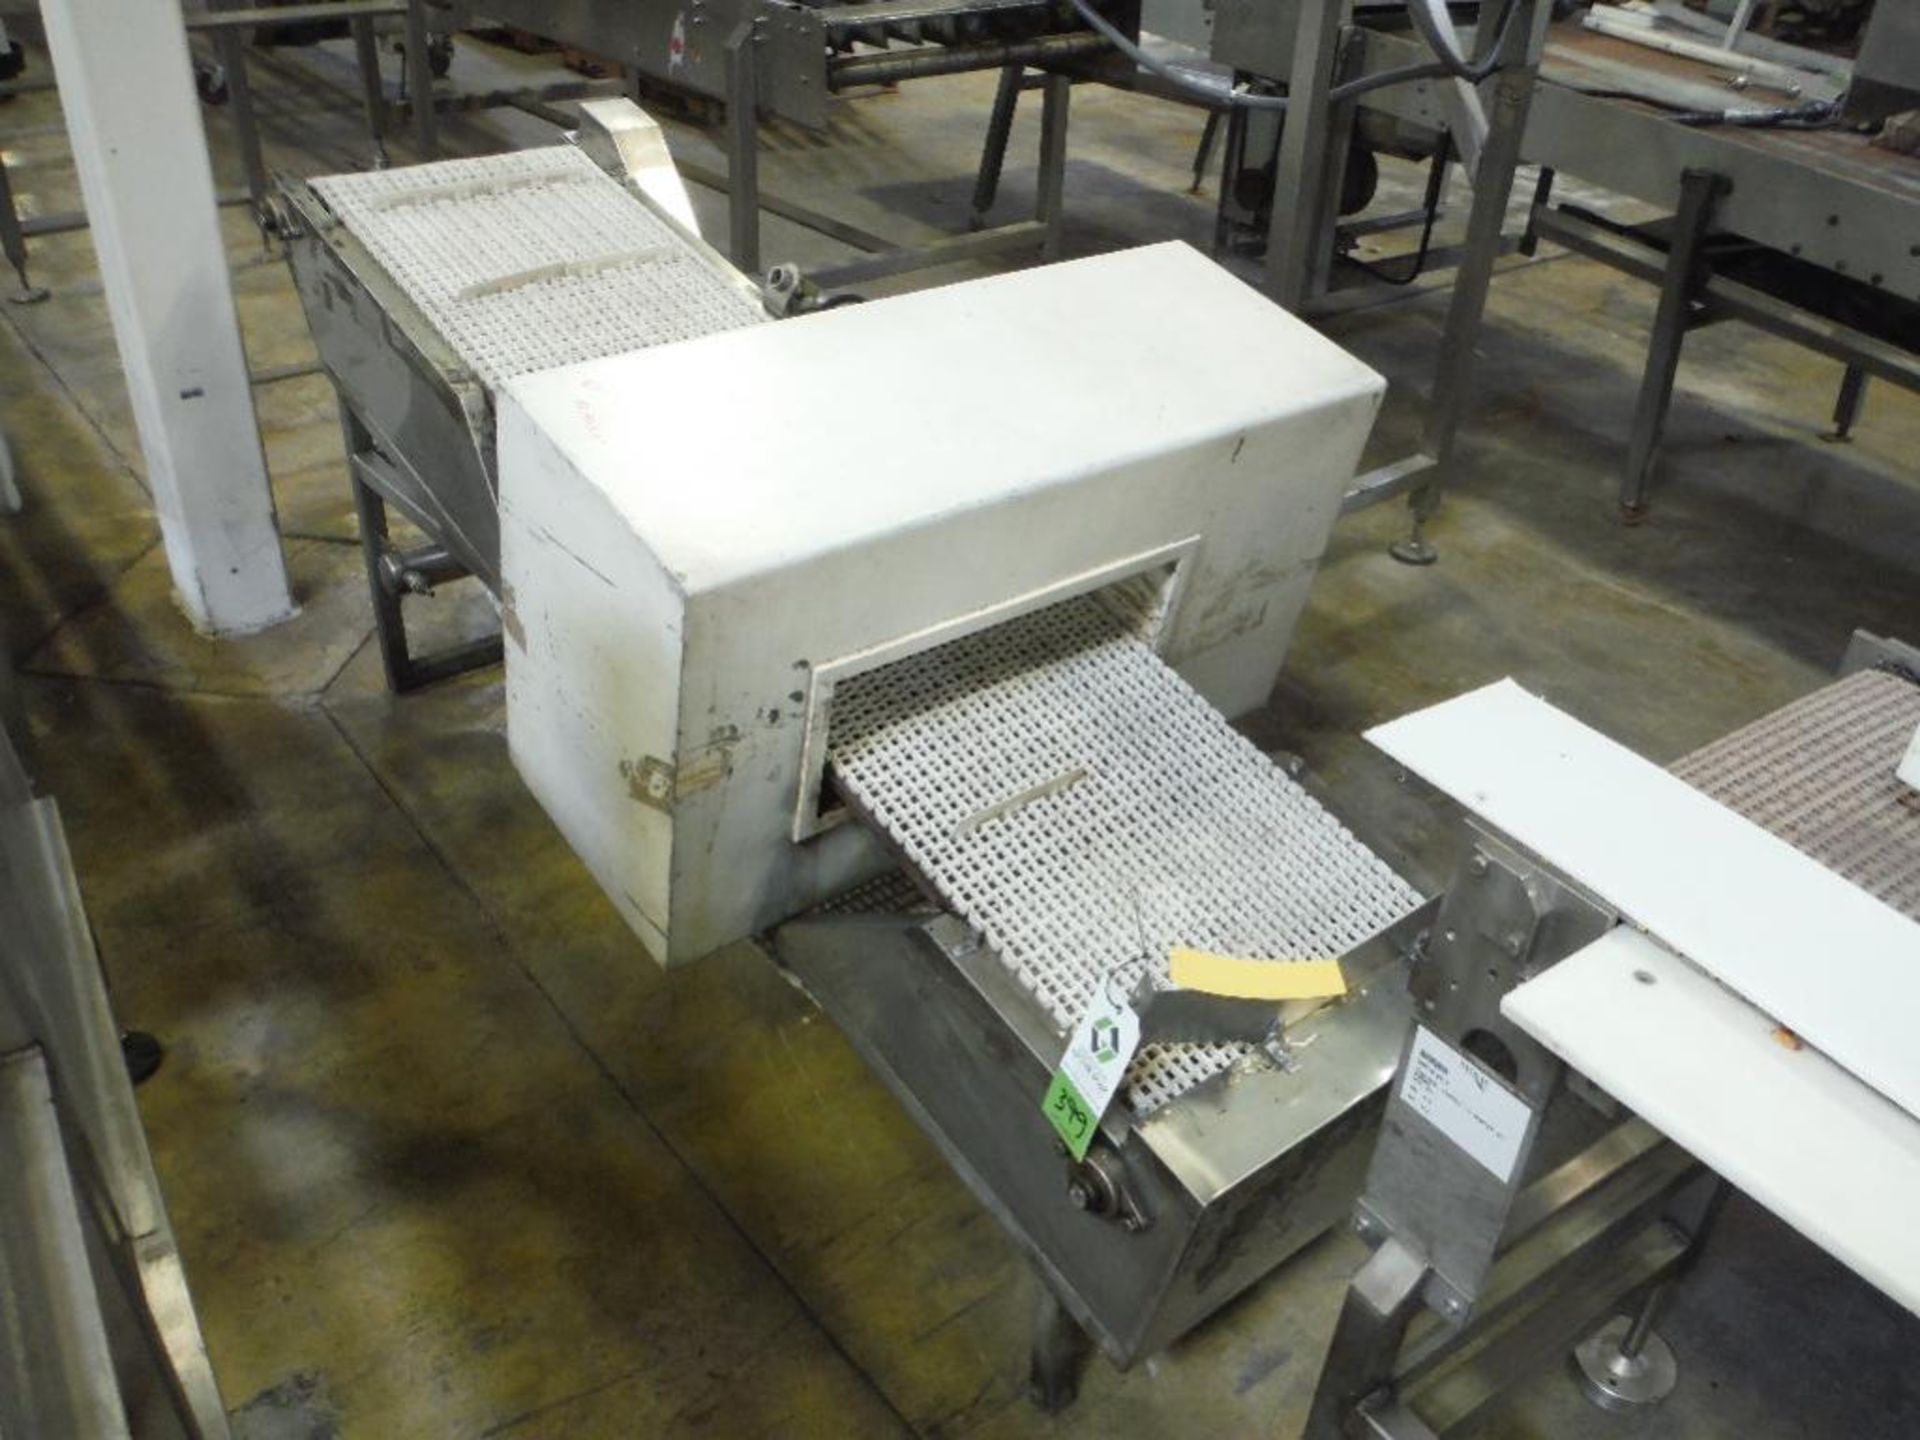 Goring Kerr metal detector, 20 in. wide x 5 in. tall aperture, conveyor 82 in. long x 18 in. wide, S